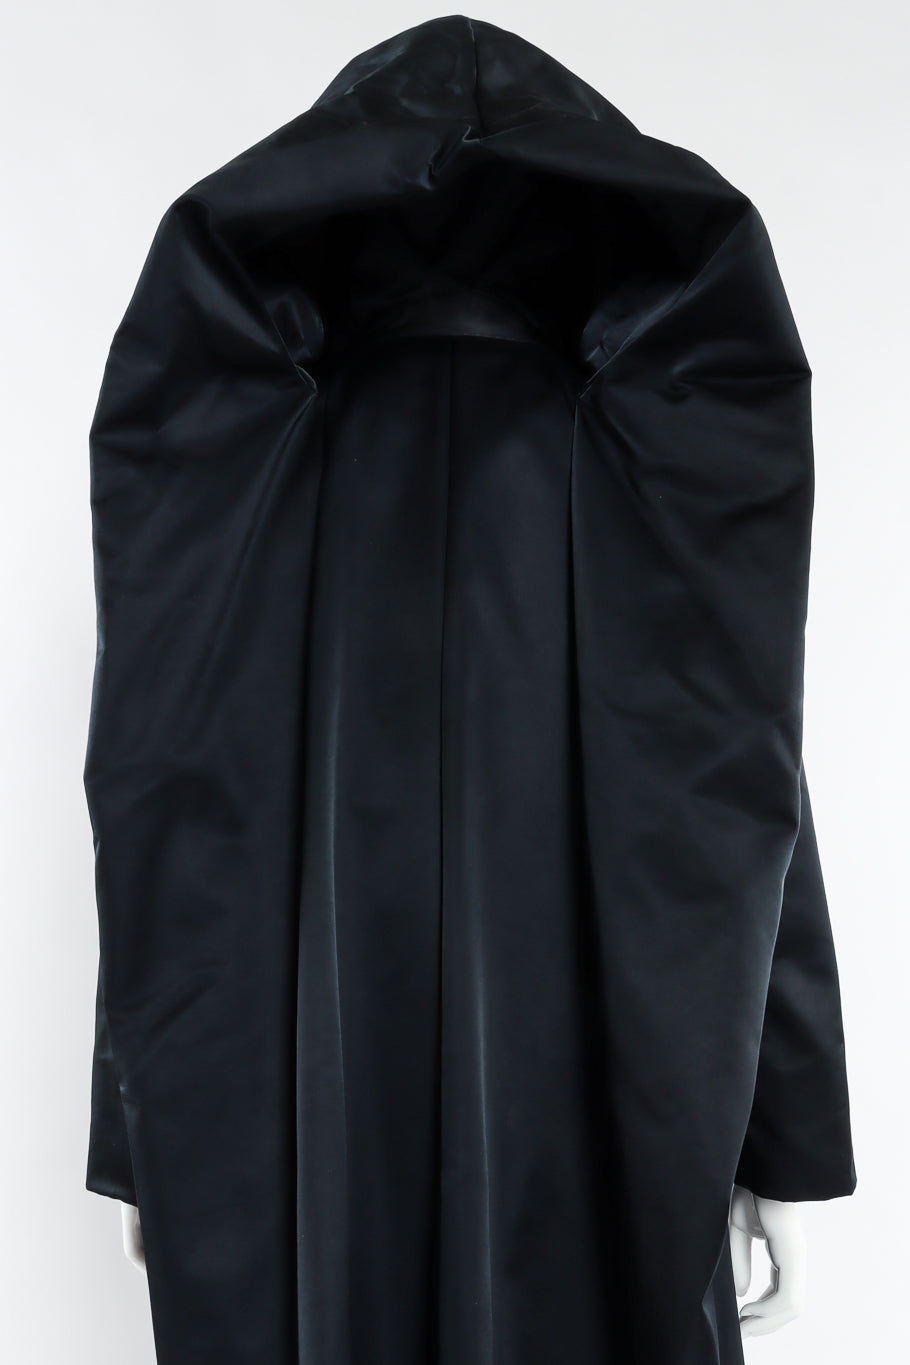 Vintage Issey Miyake Hooded Satin Overcoat back hood drape detail @ Recess LA